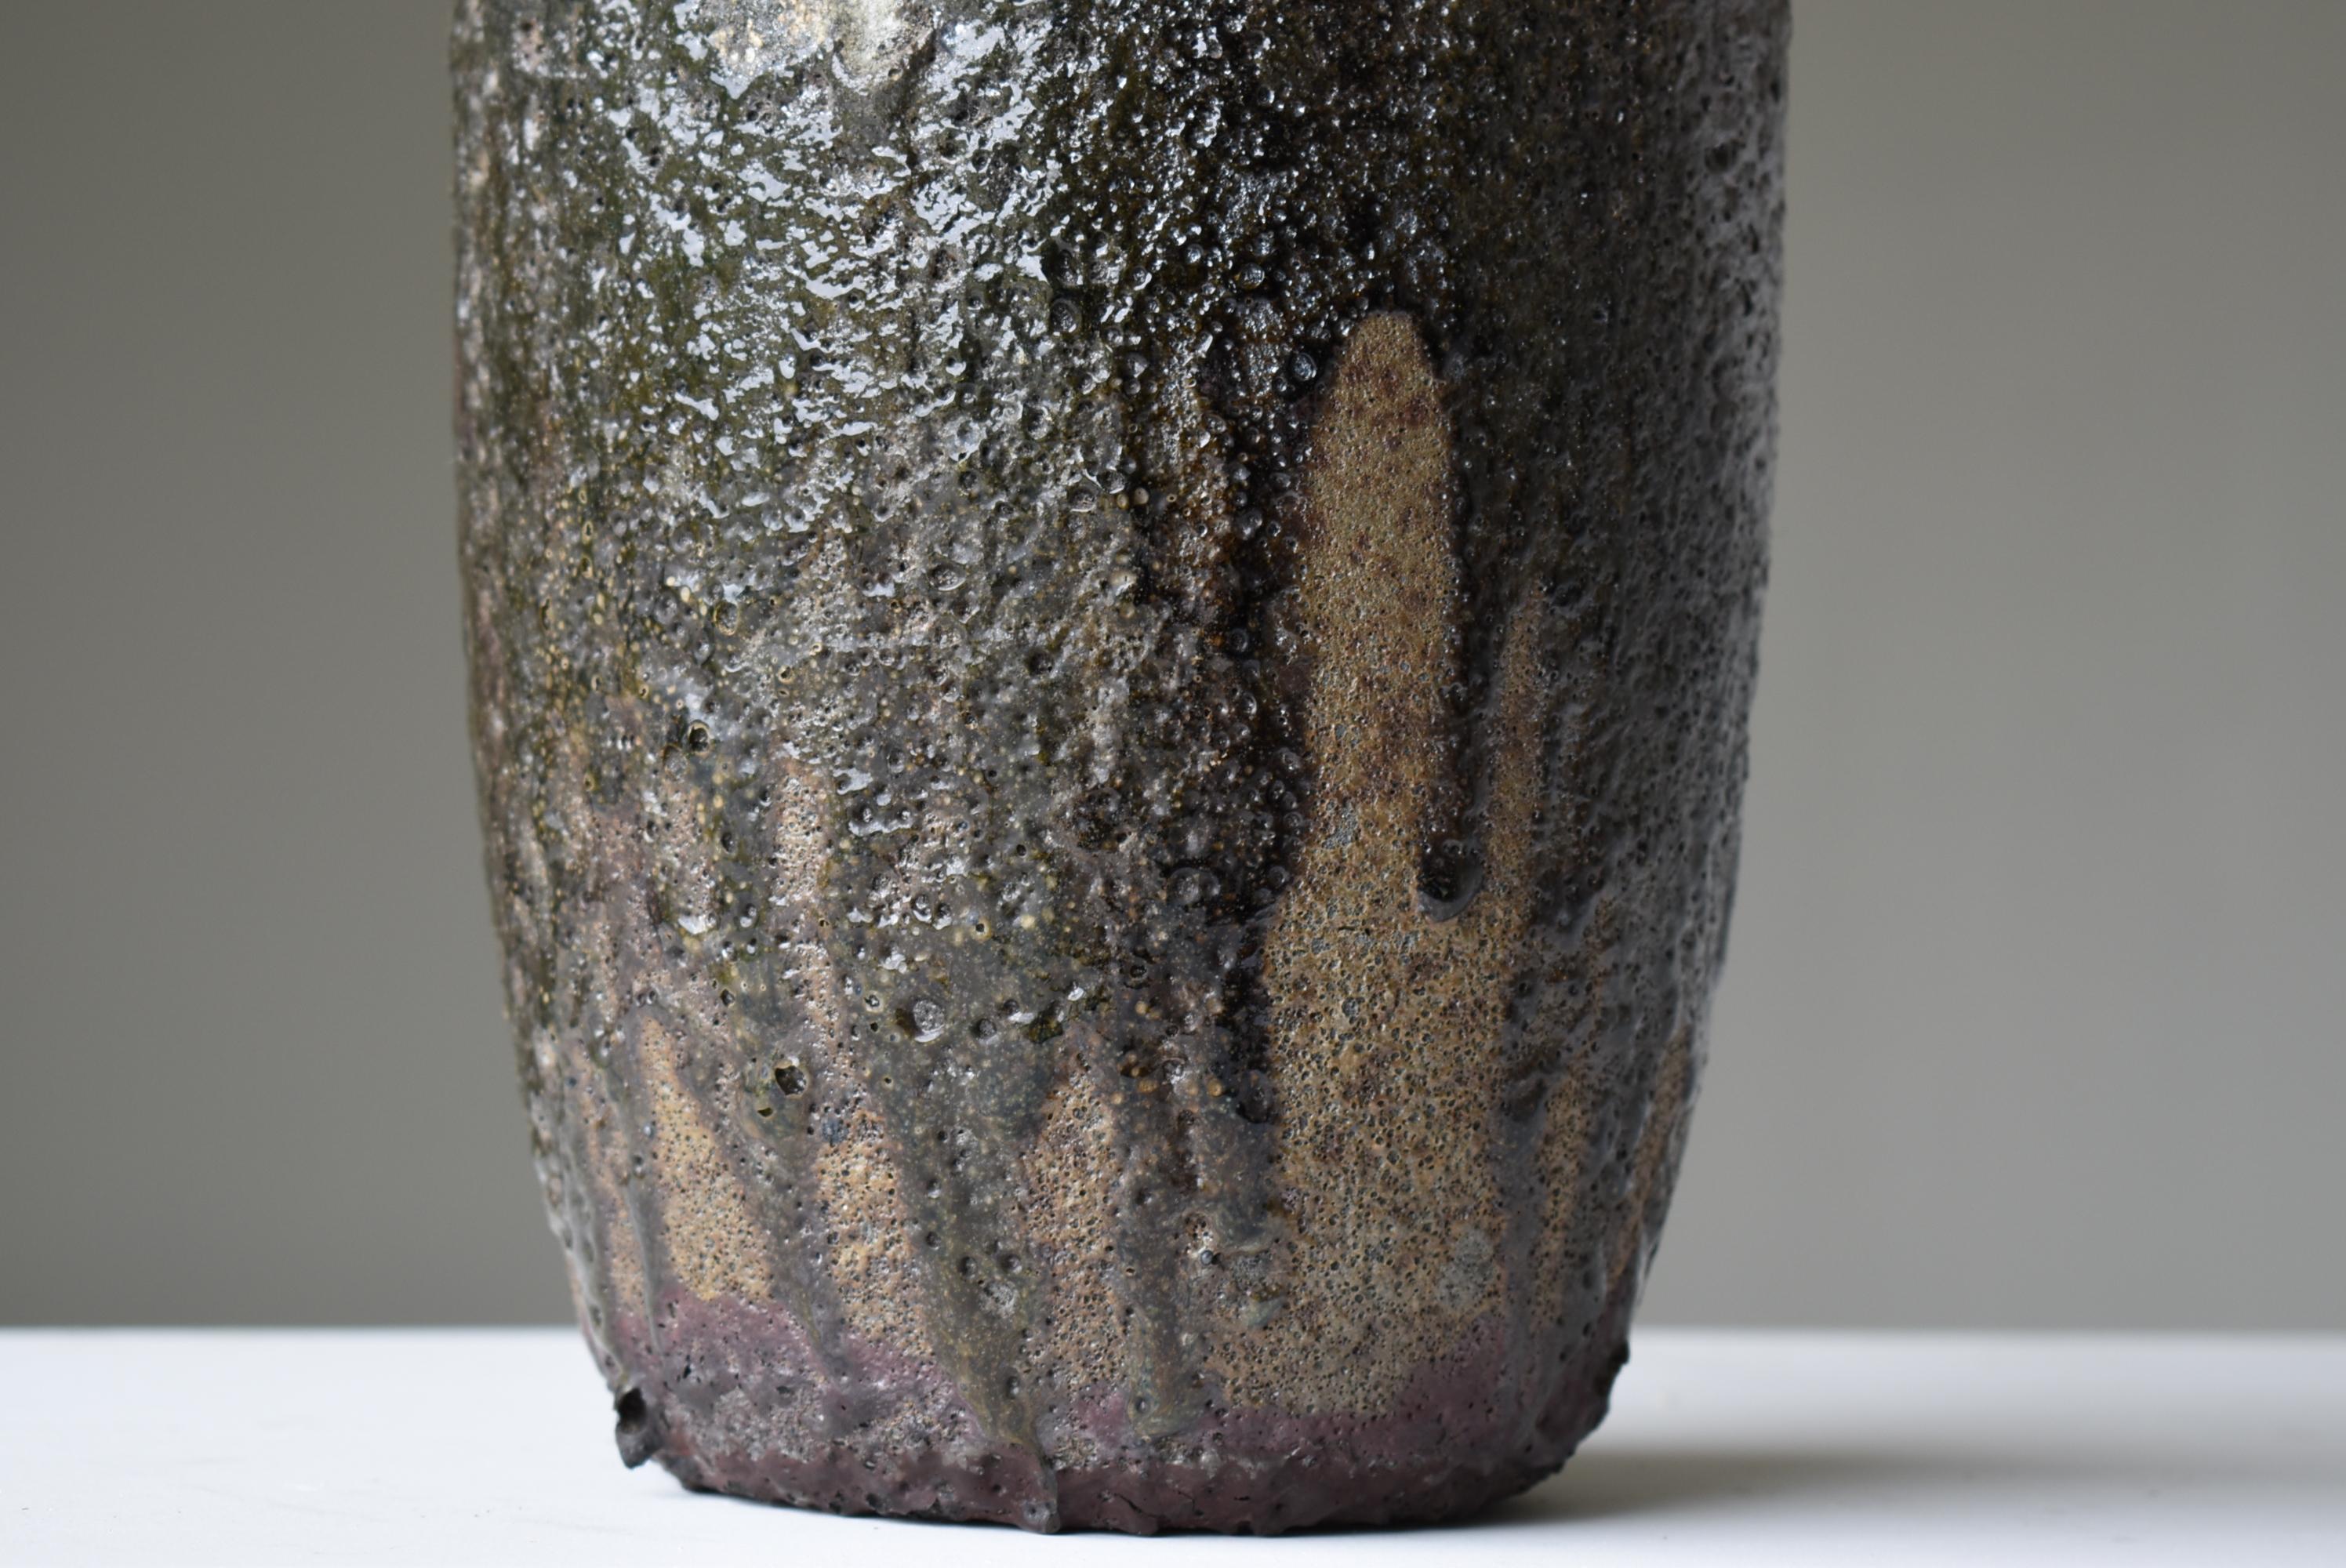 Showa Japanese Old Stone Pot 1920s-1950s/Pottery Jar Vessel Tsubo Wabisabi-Art Ceramic